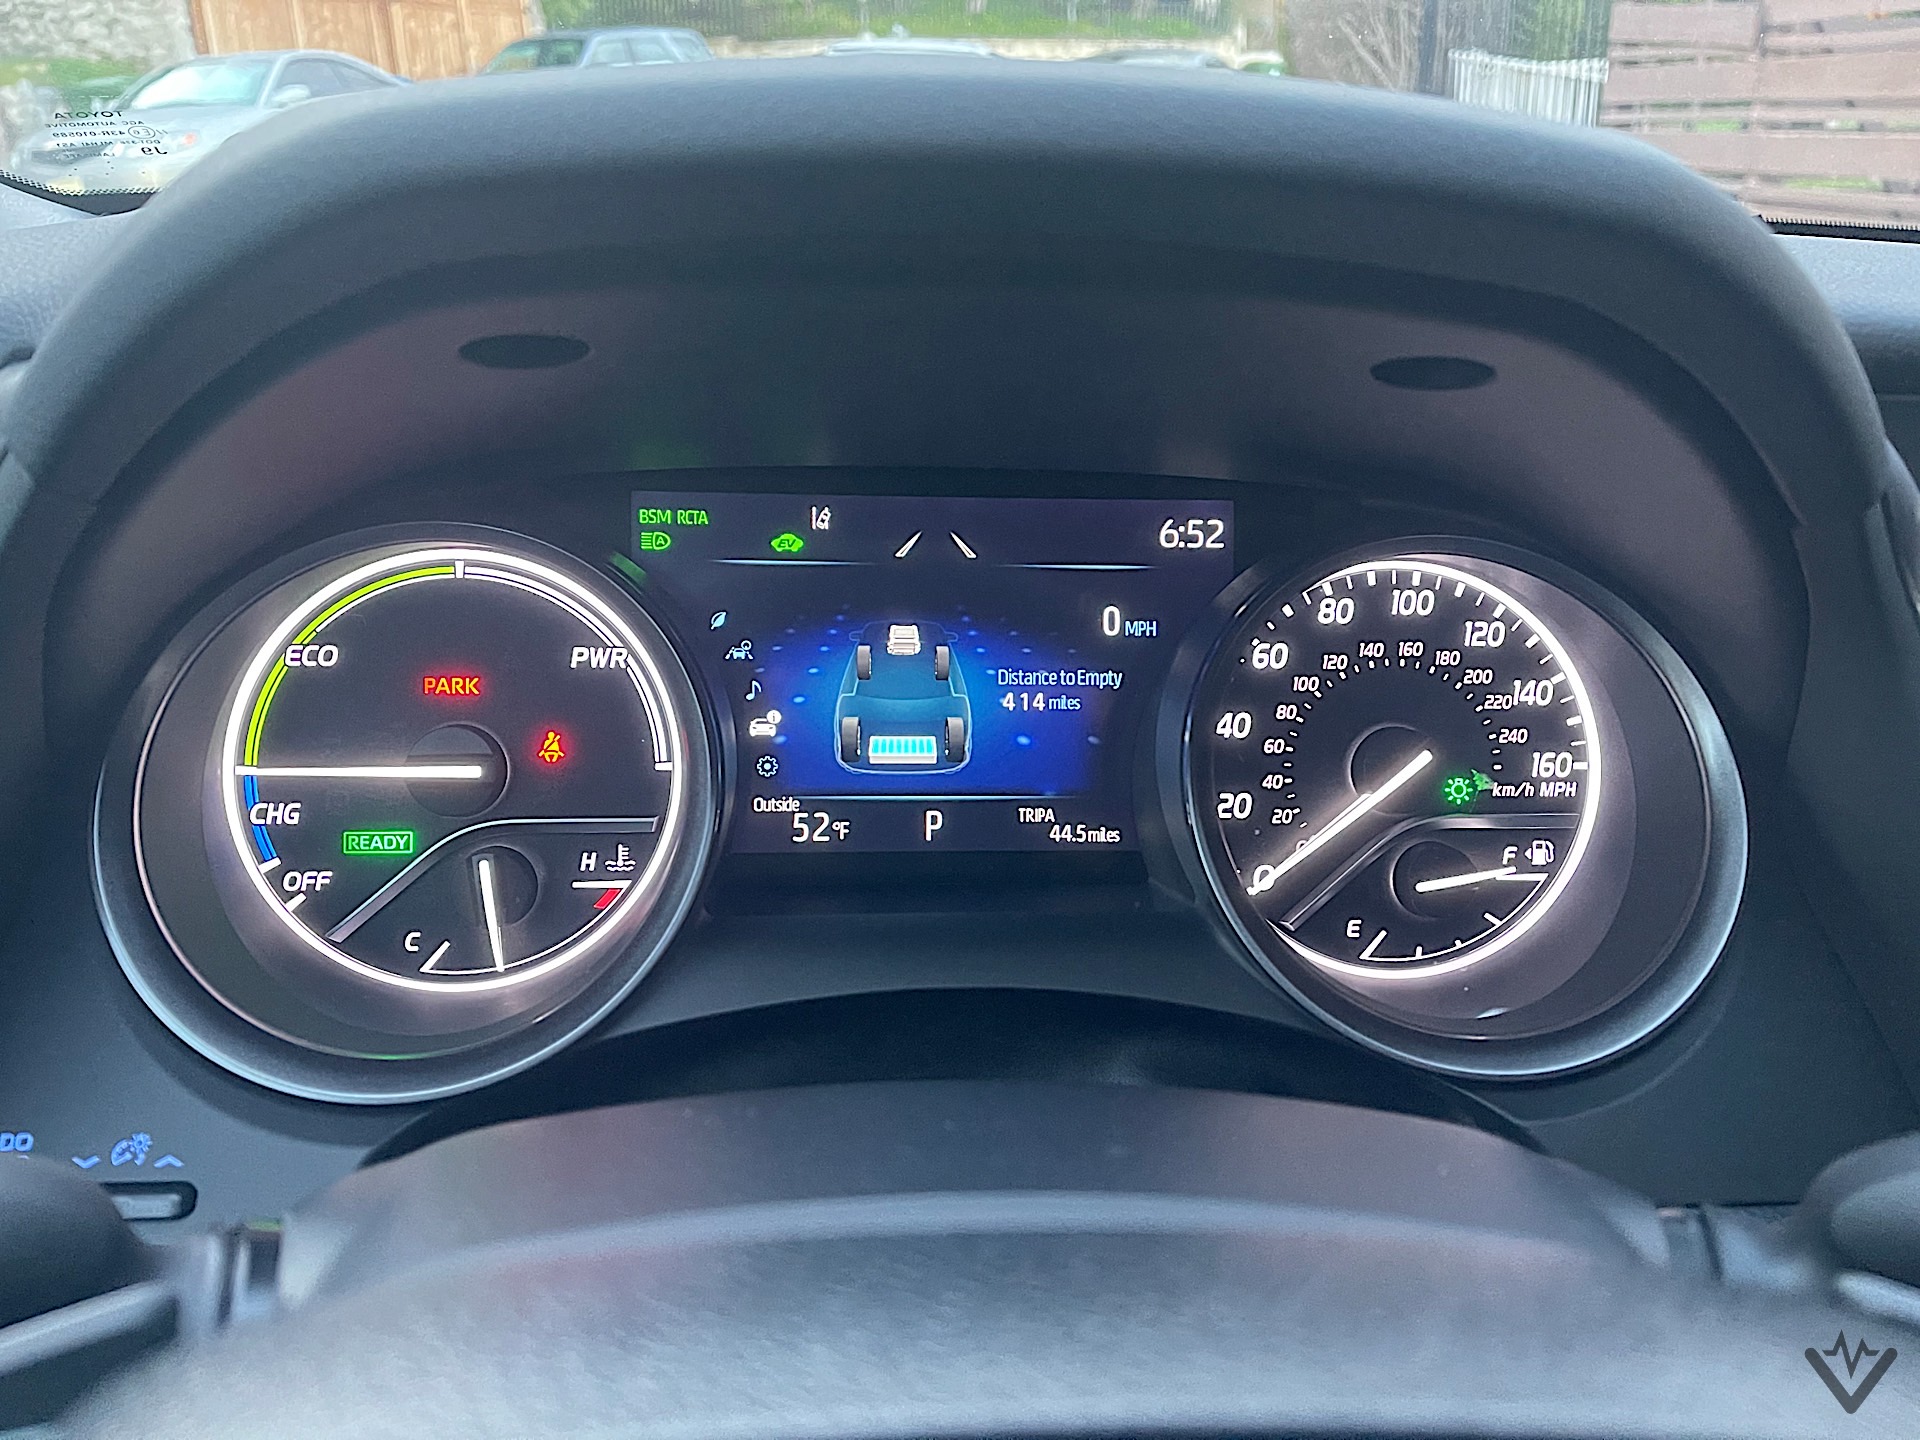 2021 Toyota Camry Hybrid gauge cluster 01 1